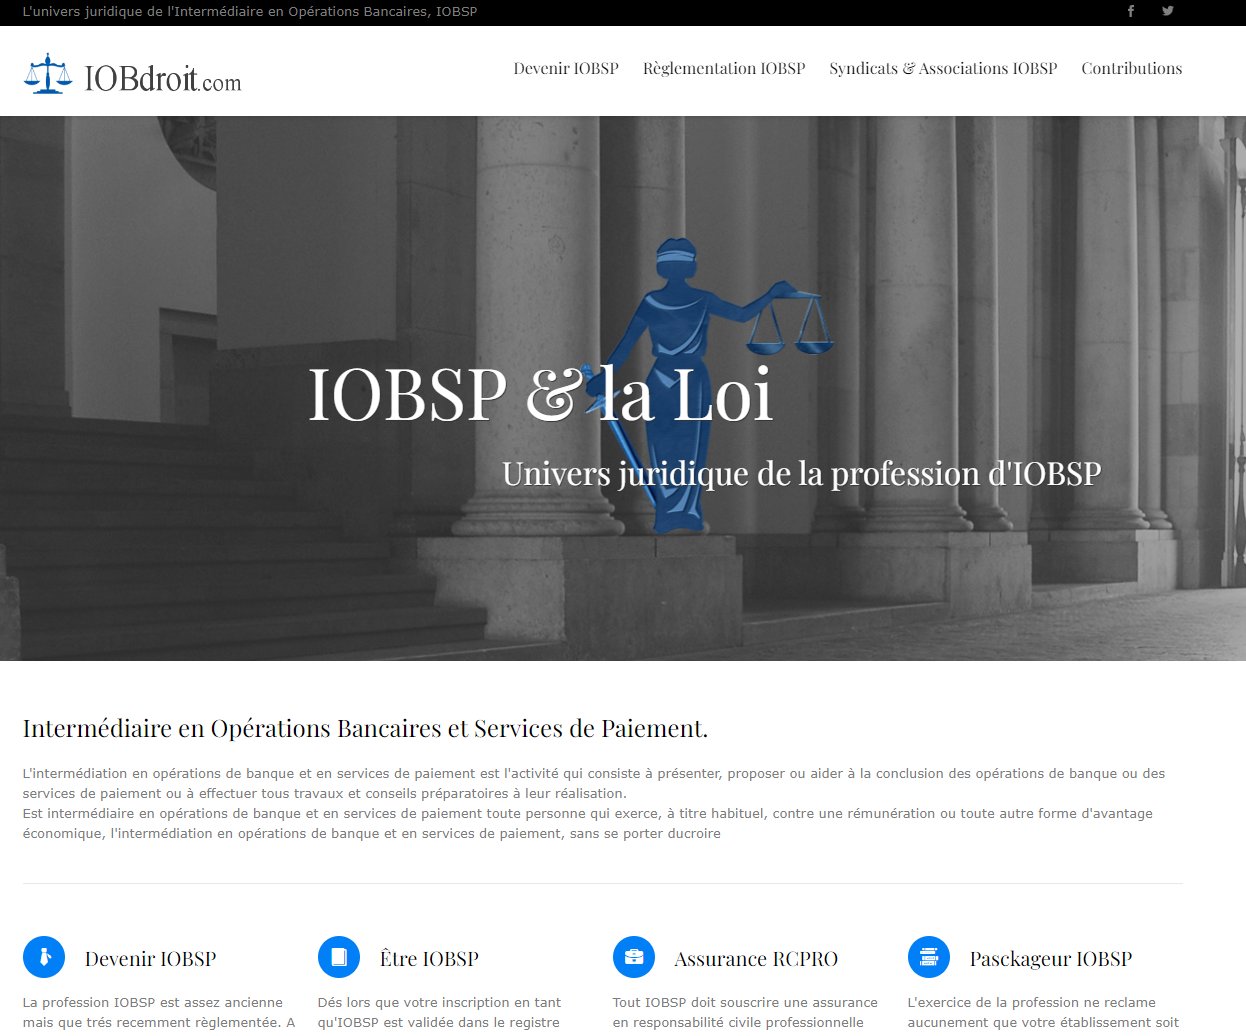 Univers juridique de la profession d'IOBSP